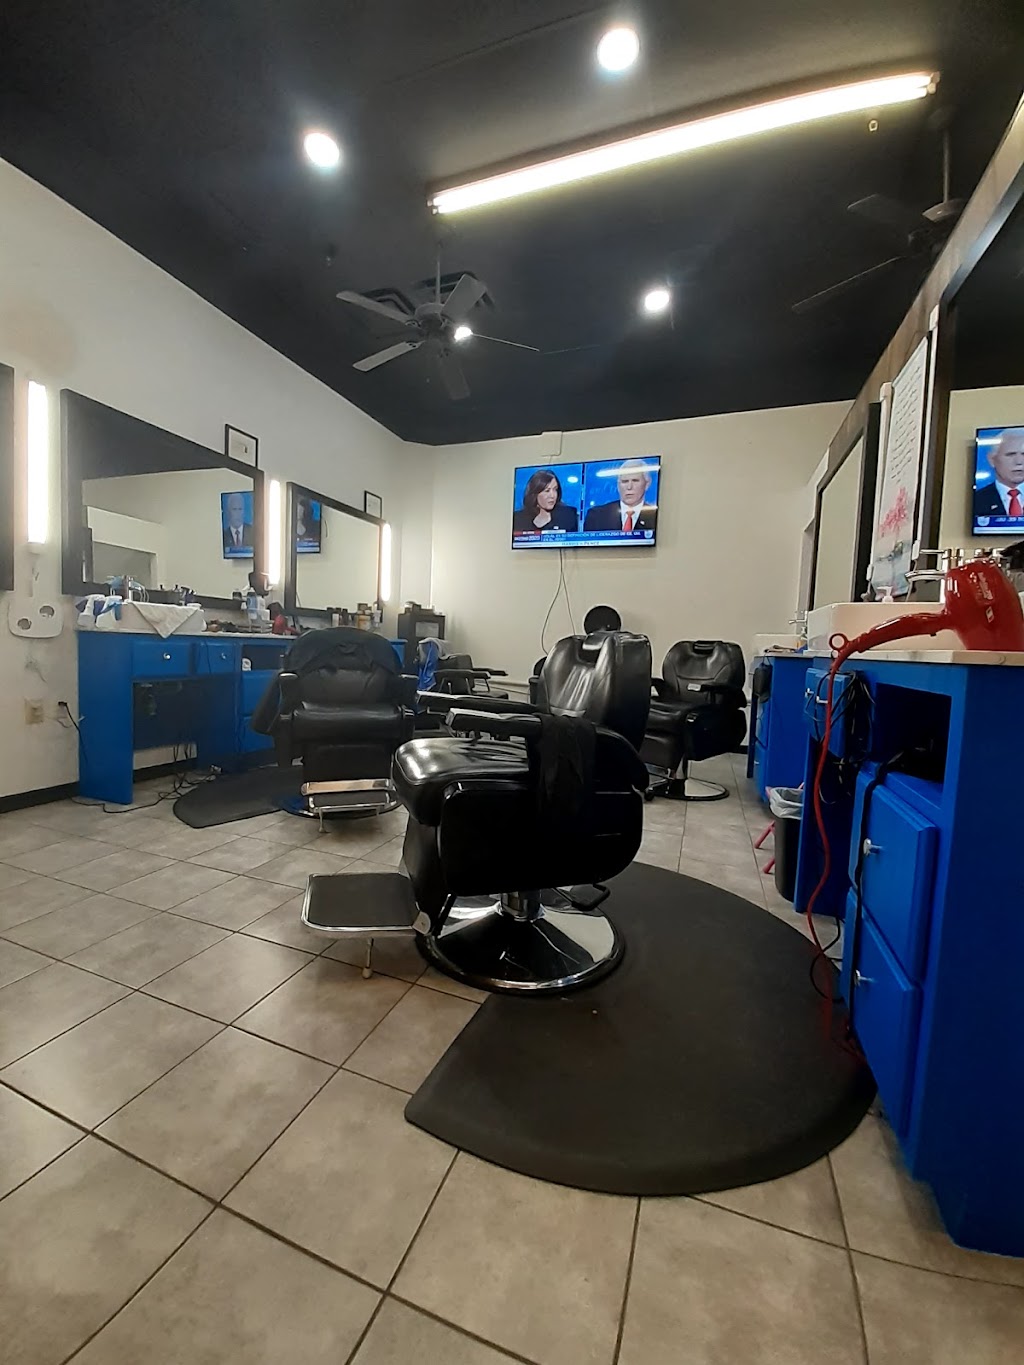 Mazvidal barber&salon | 1619 N 59th Ave suit 3, Phoenix, AZ 85035, USA | Phone: (602) 278-2798